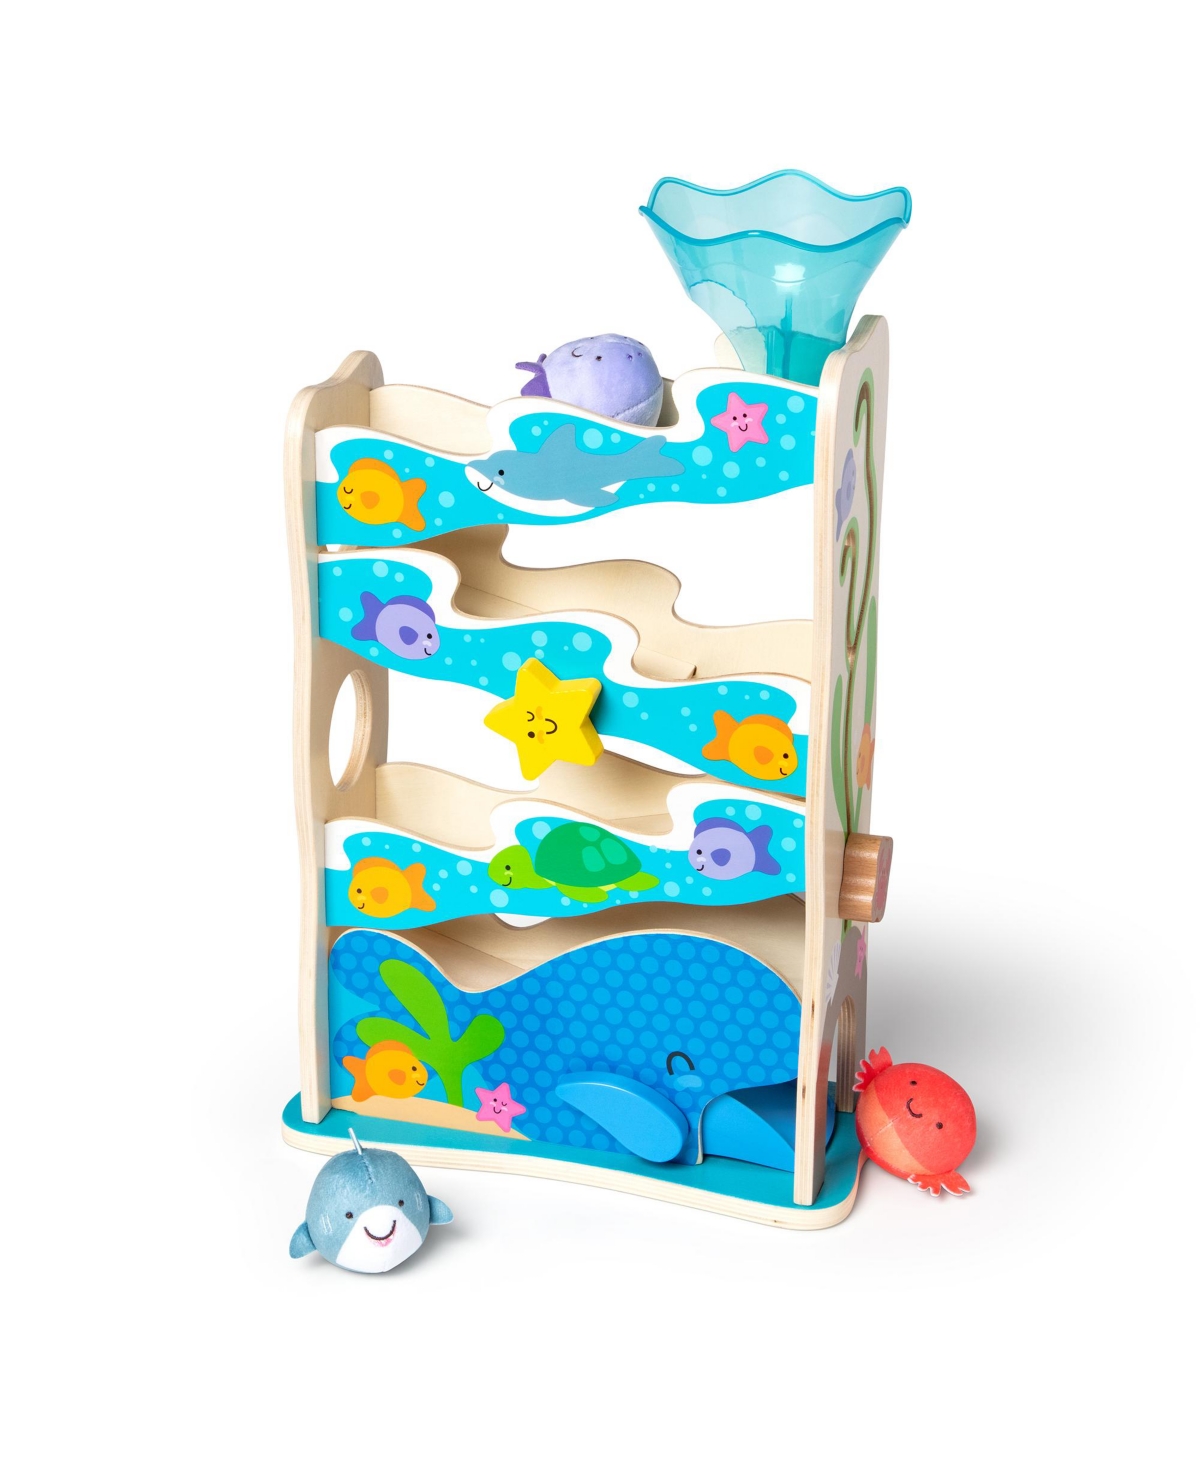 Melissa & Doug Kids' Rollables Wooden Ocean Slide Infant And Toddler Toy 4 Piece Set In Multi